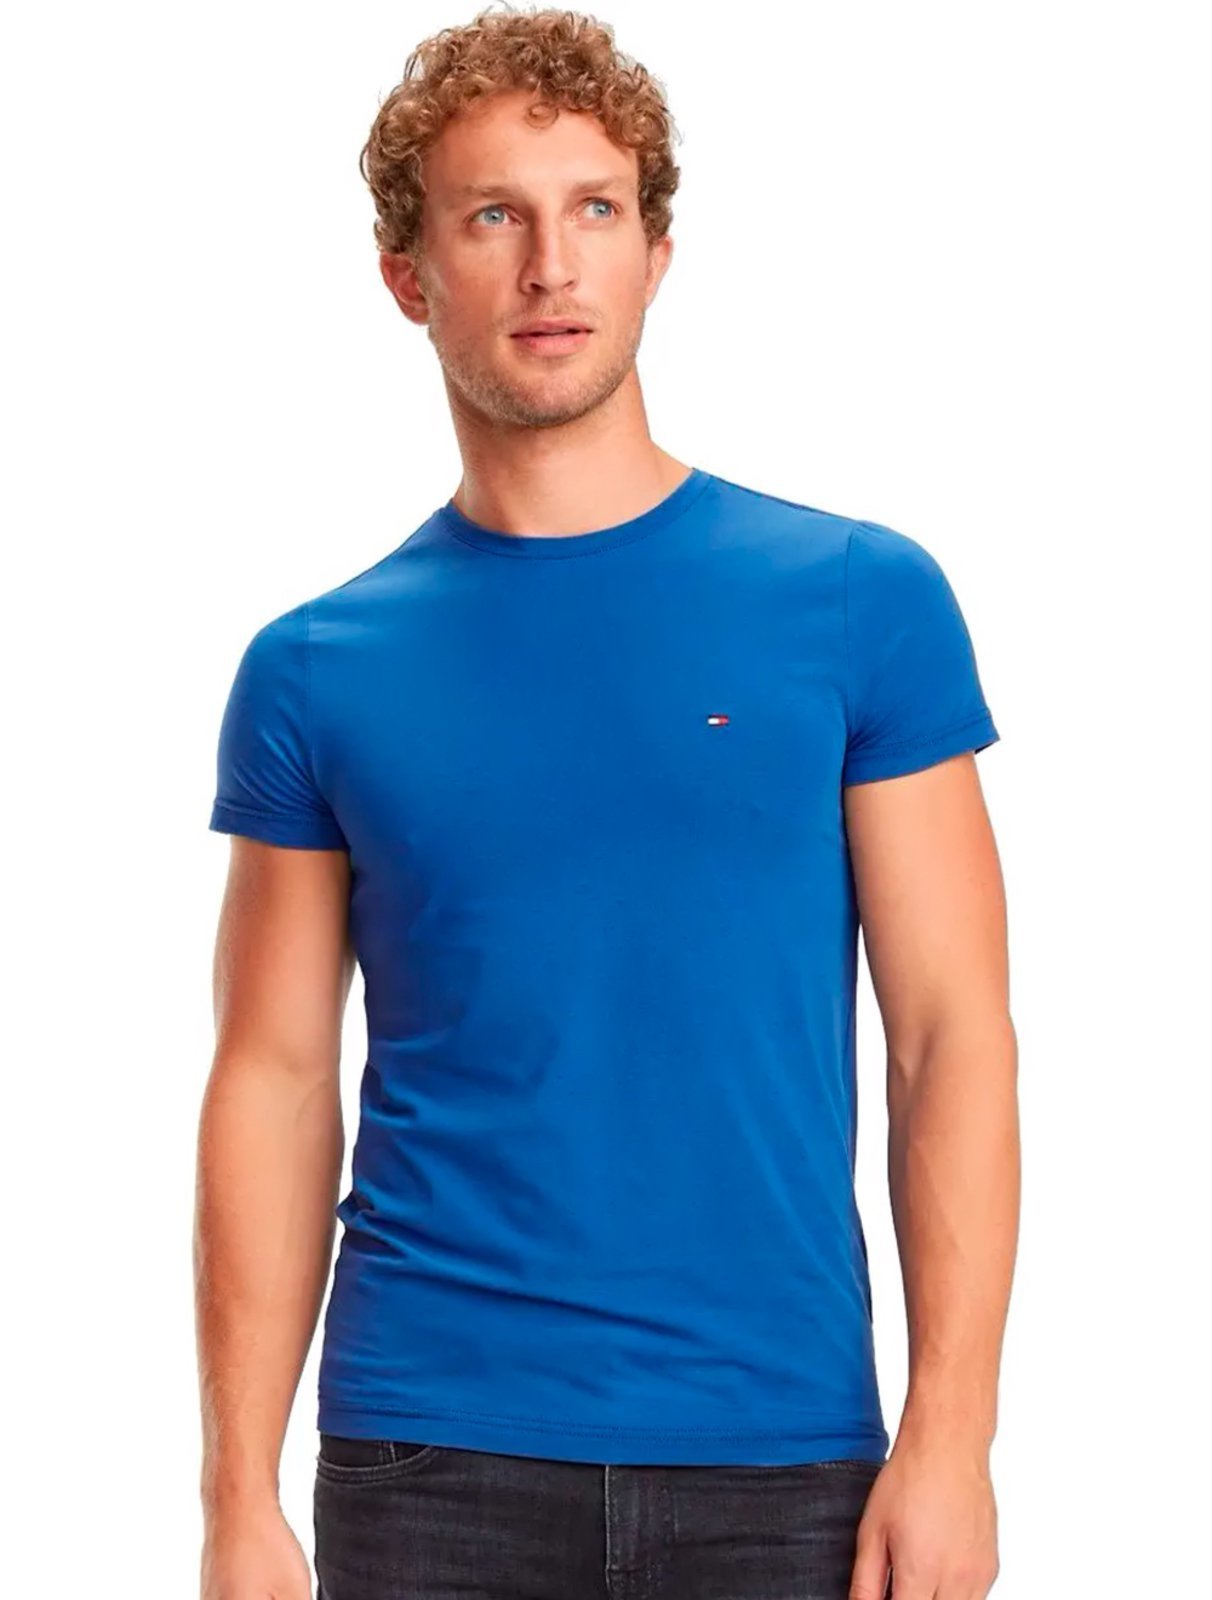 Camiseta Tommy Hilfiger Wcc Essential Cotton Tee Azul - Estilo